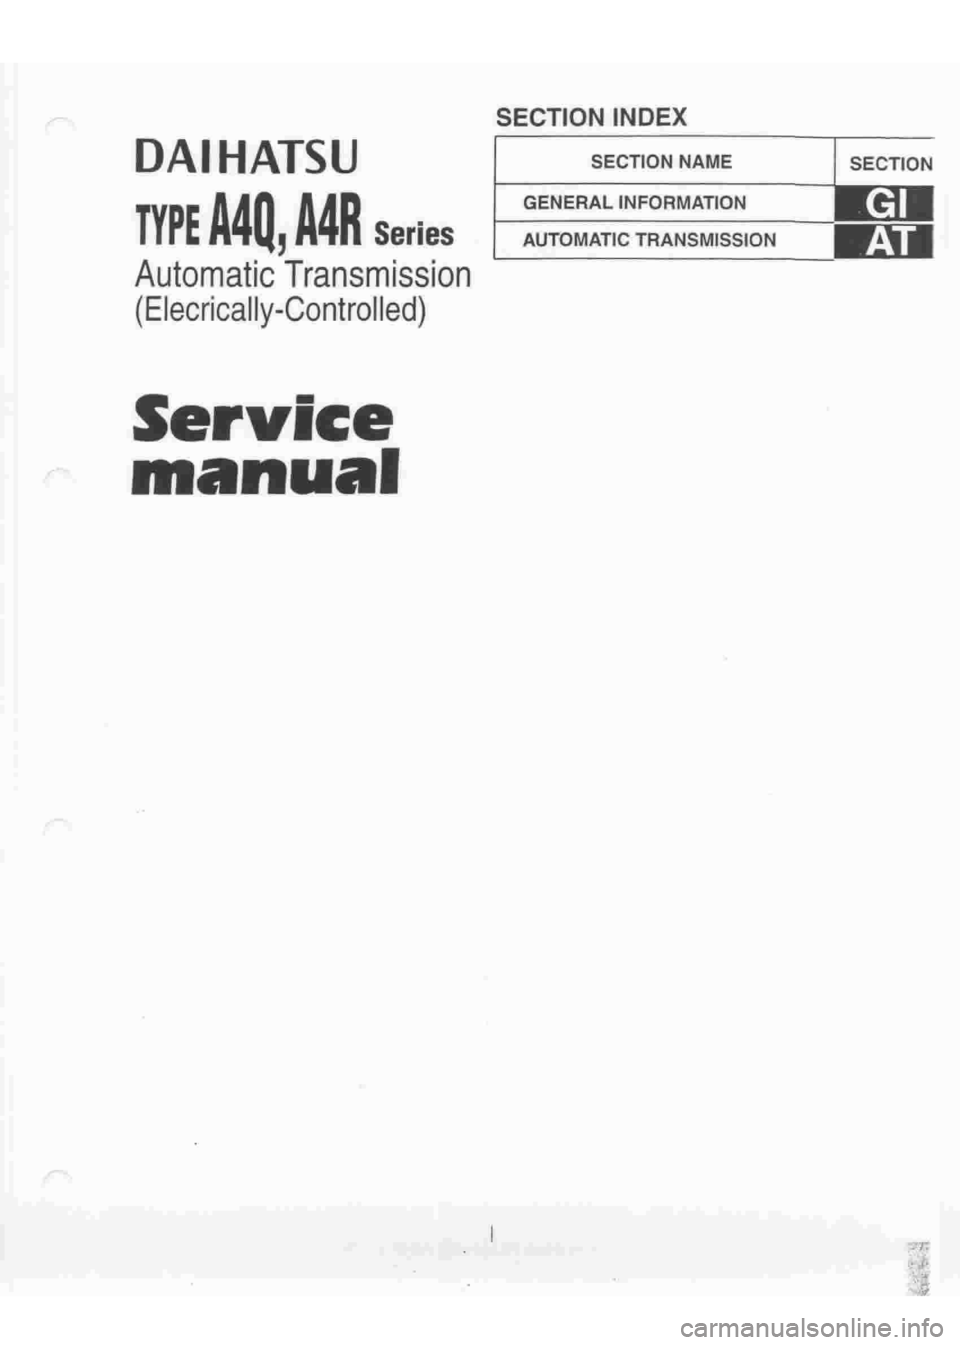 DAIHATSU TERIOS 2000  Service Repair Manual 
 
www.WorkshopManuals.co.uk

 
Purchased from www.WorkshopManuals.co.uk 